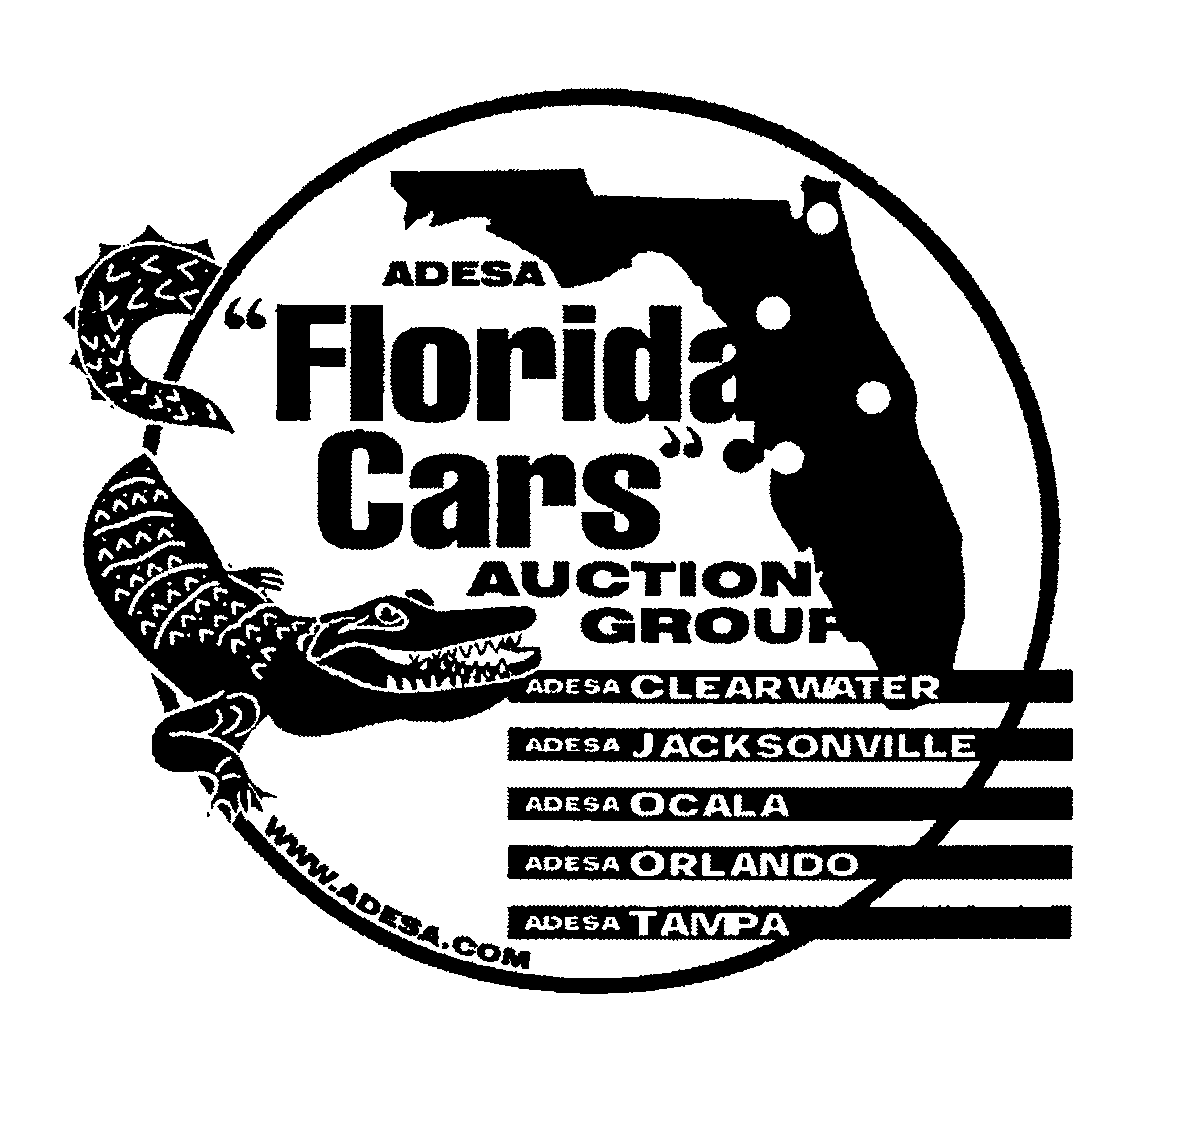  ADESA "FLORIDA CARS" AUCTION GROUP ADESA CLEARWATER ADESA JACKSONVILLE ADESA OCALA ADESA ORLANDO ADESA TAMPA WWW.ADESA.COM